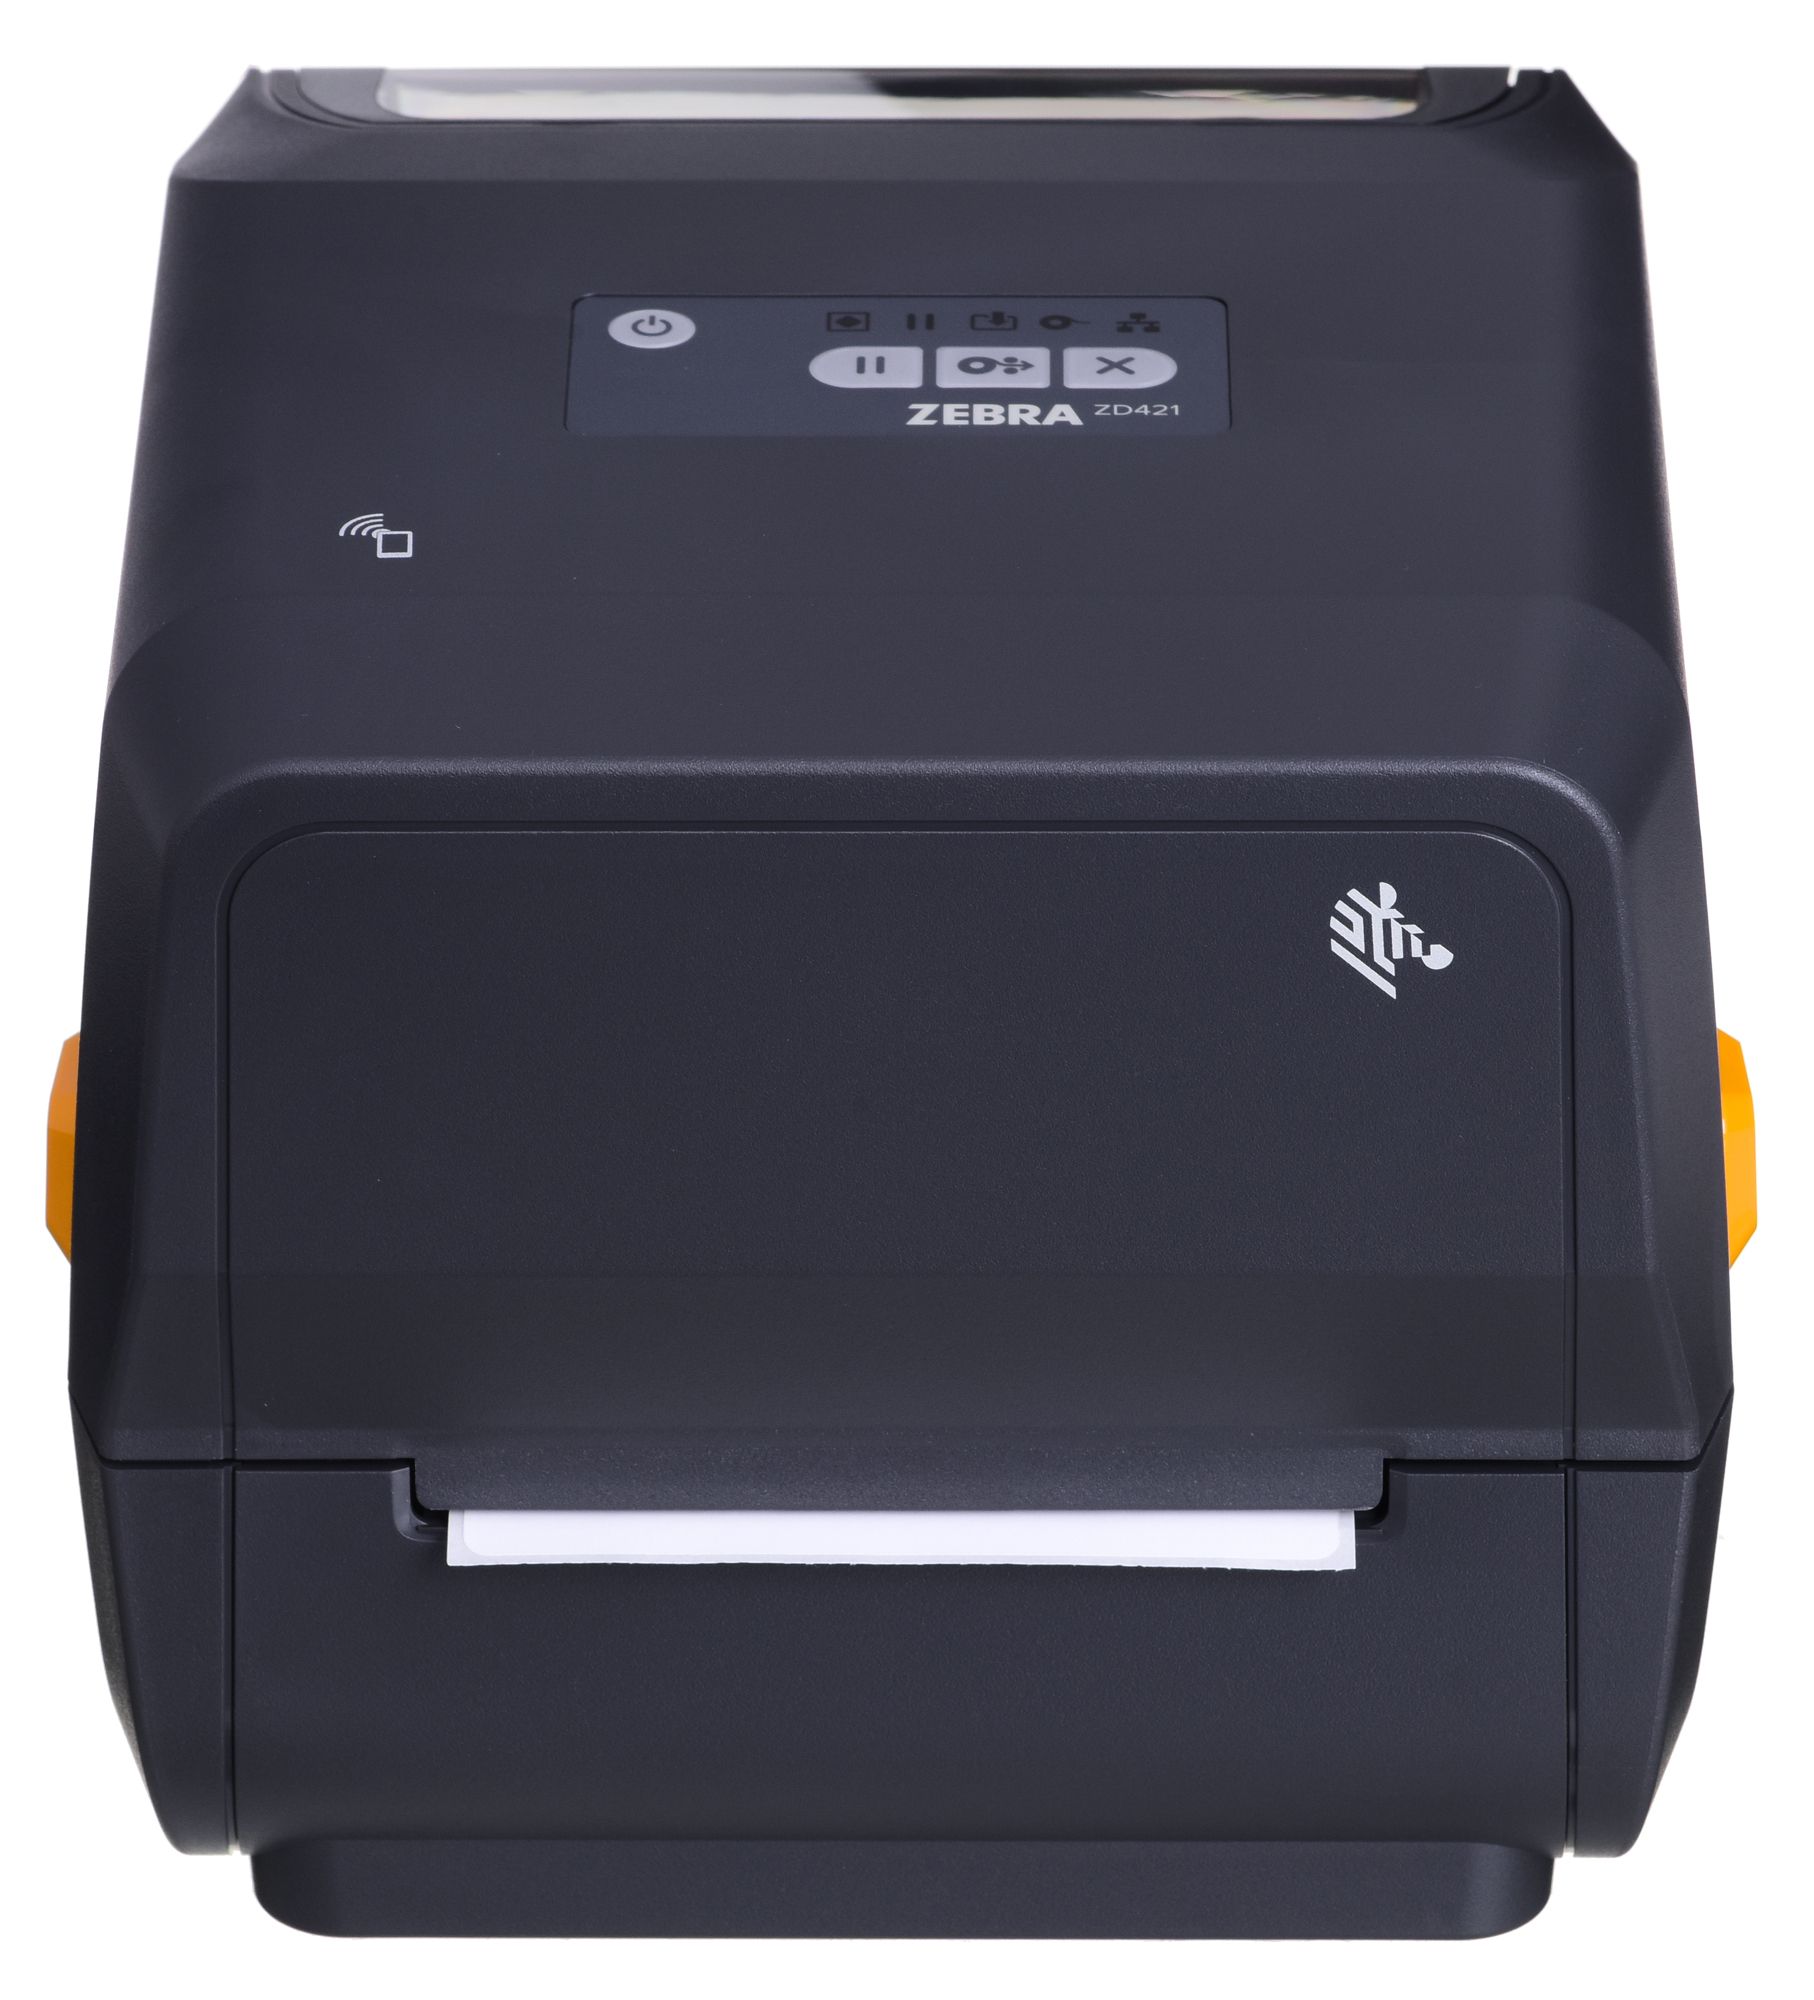 Zebra ZD421 label printer Thermal transfer 203 x 203 DPI Wired & Wireless_3